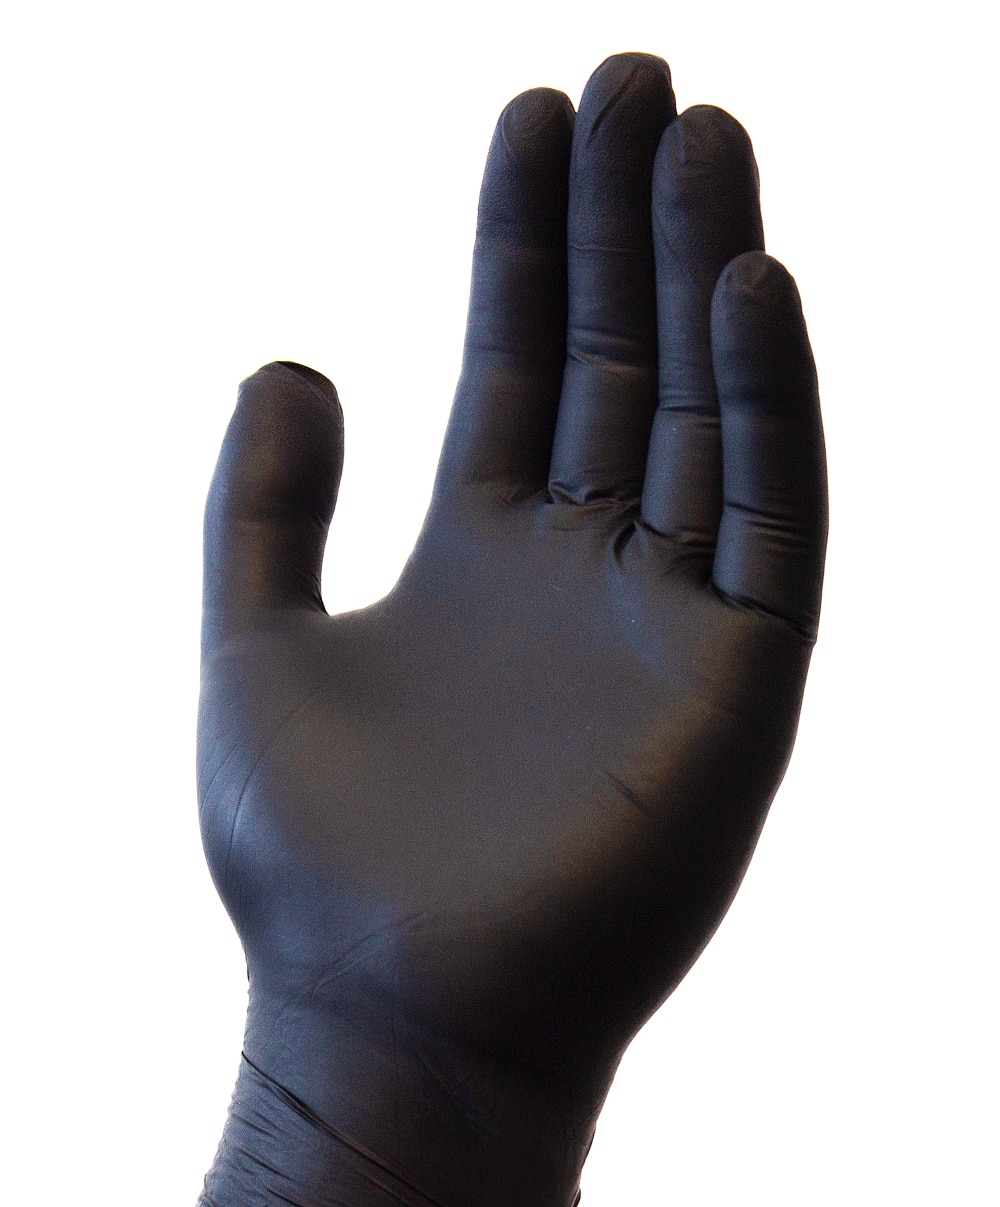 GNEP-MD-K N4432 4.3Mil Nitrile 
Medical Grade Powder Free 
Black Glove 100/Bx 10Bx/Cs